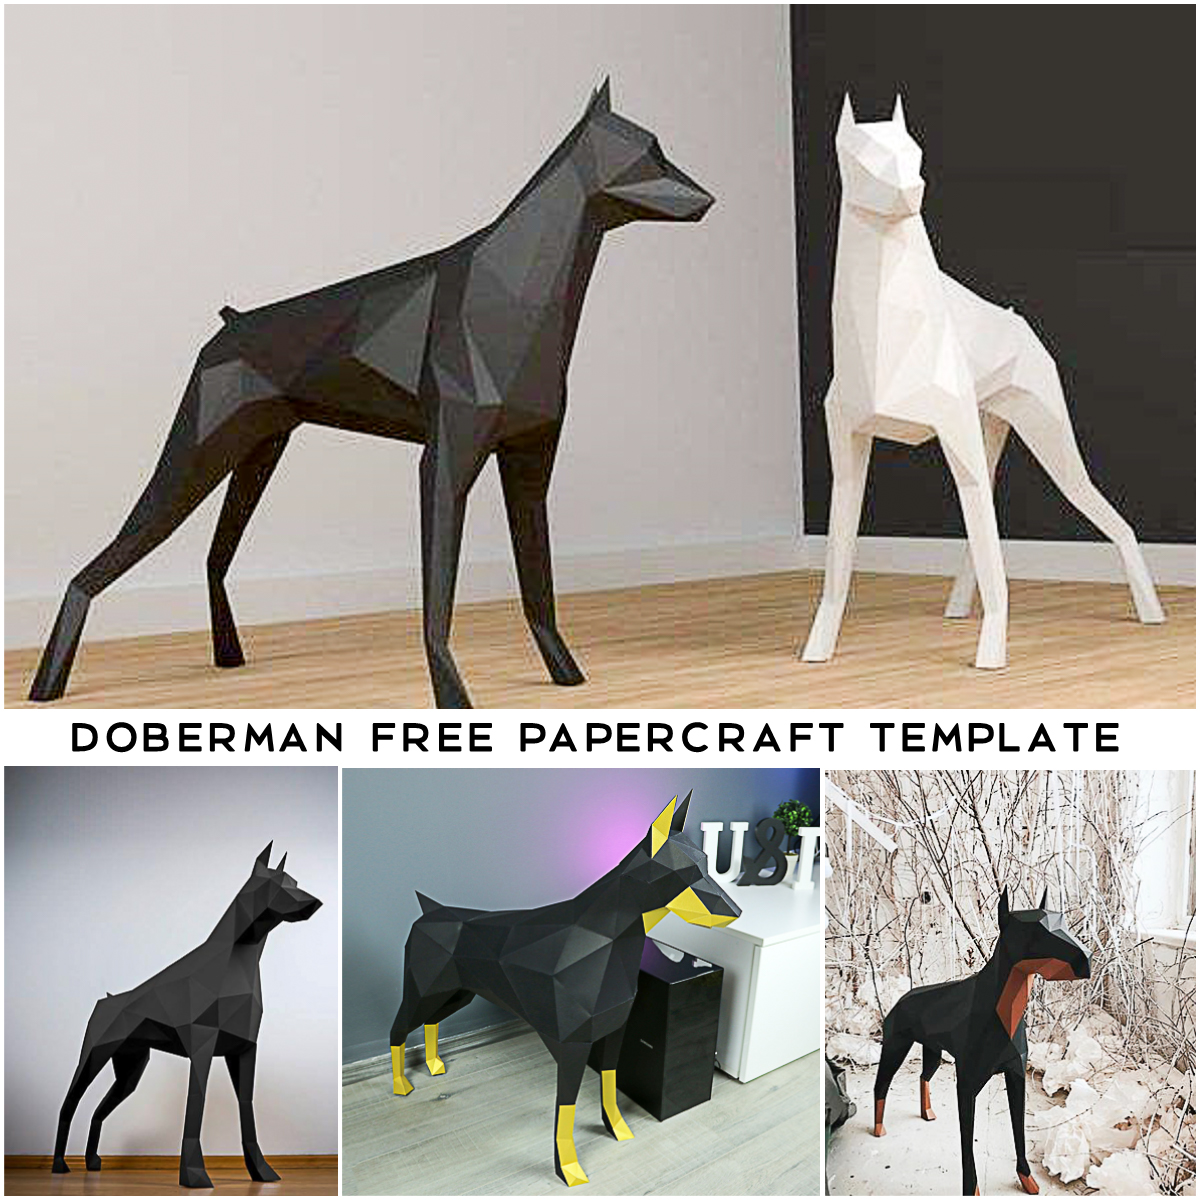 Doberman Free Papercraft Template Free Download